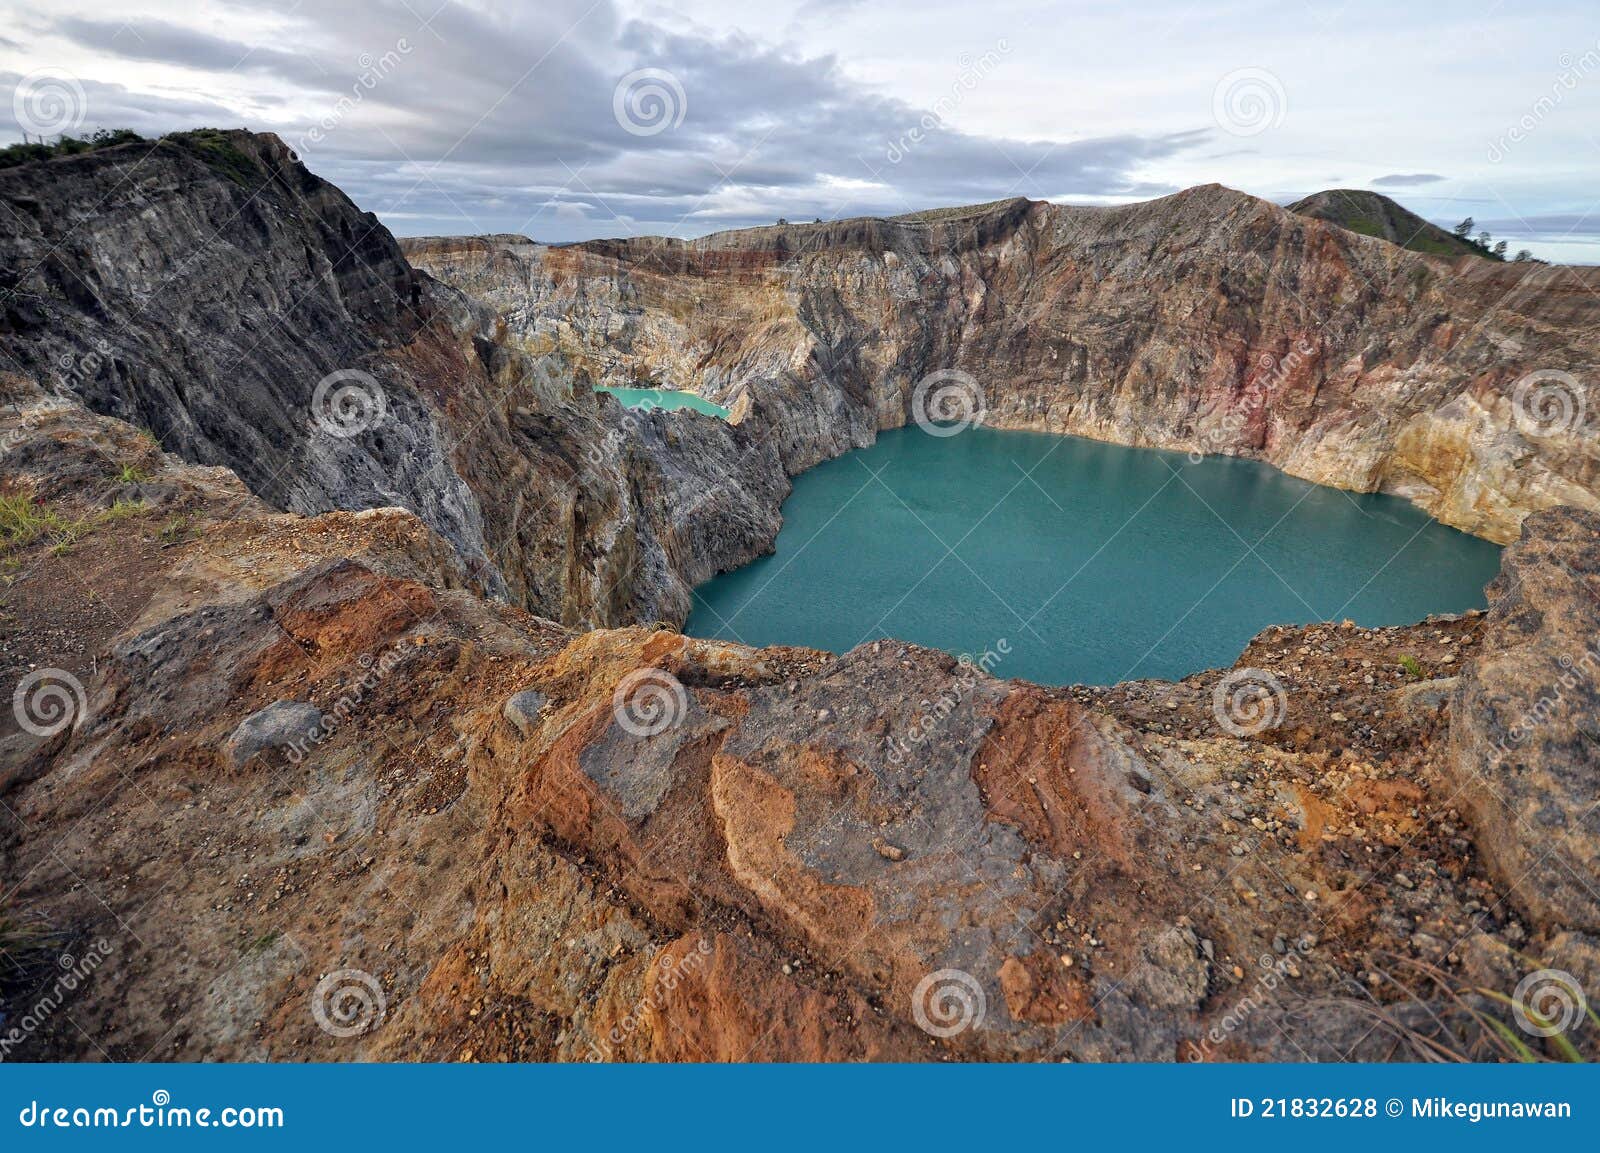 kelimutu volcanic crater